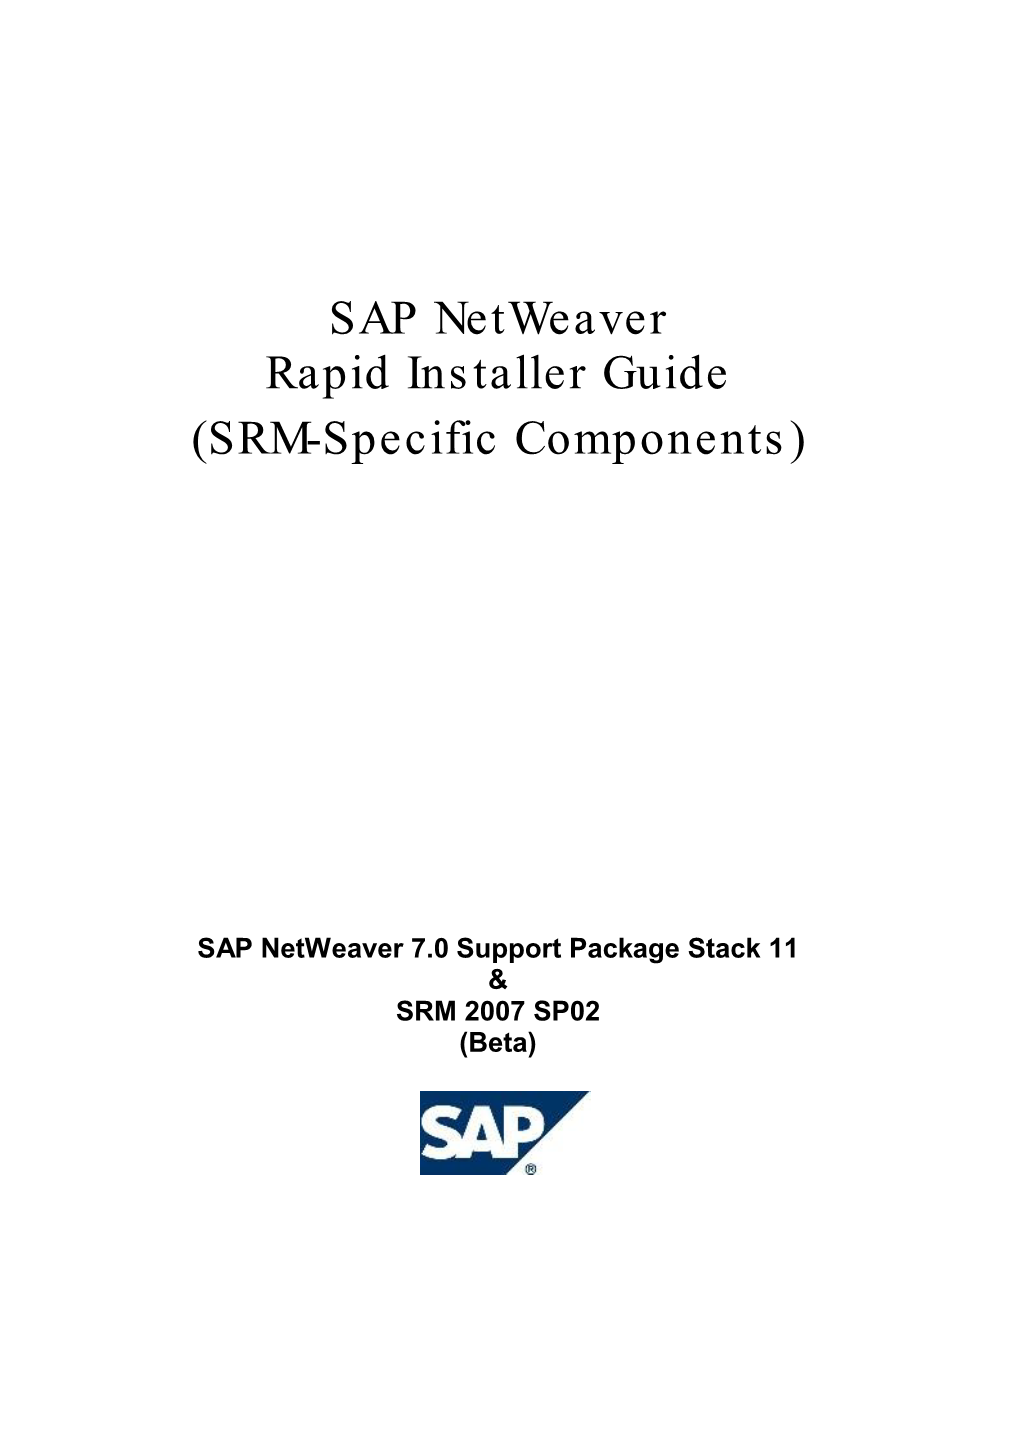 SAP Netweaver Rapid Installer Guide (SRM-Specific Components)